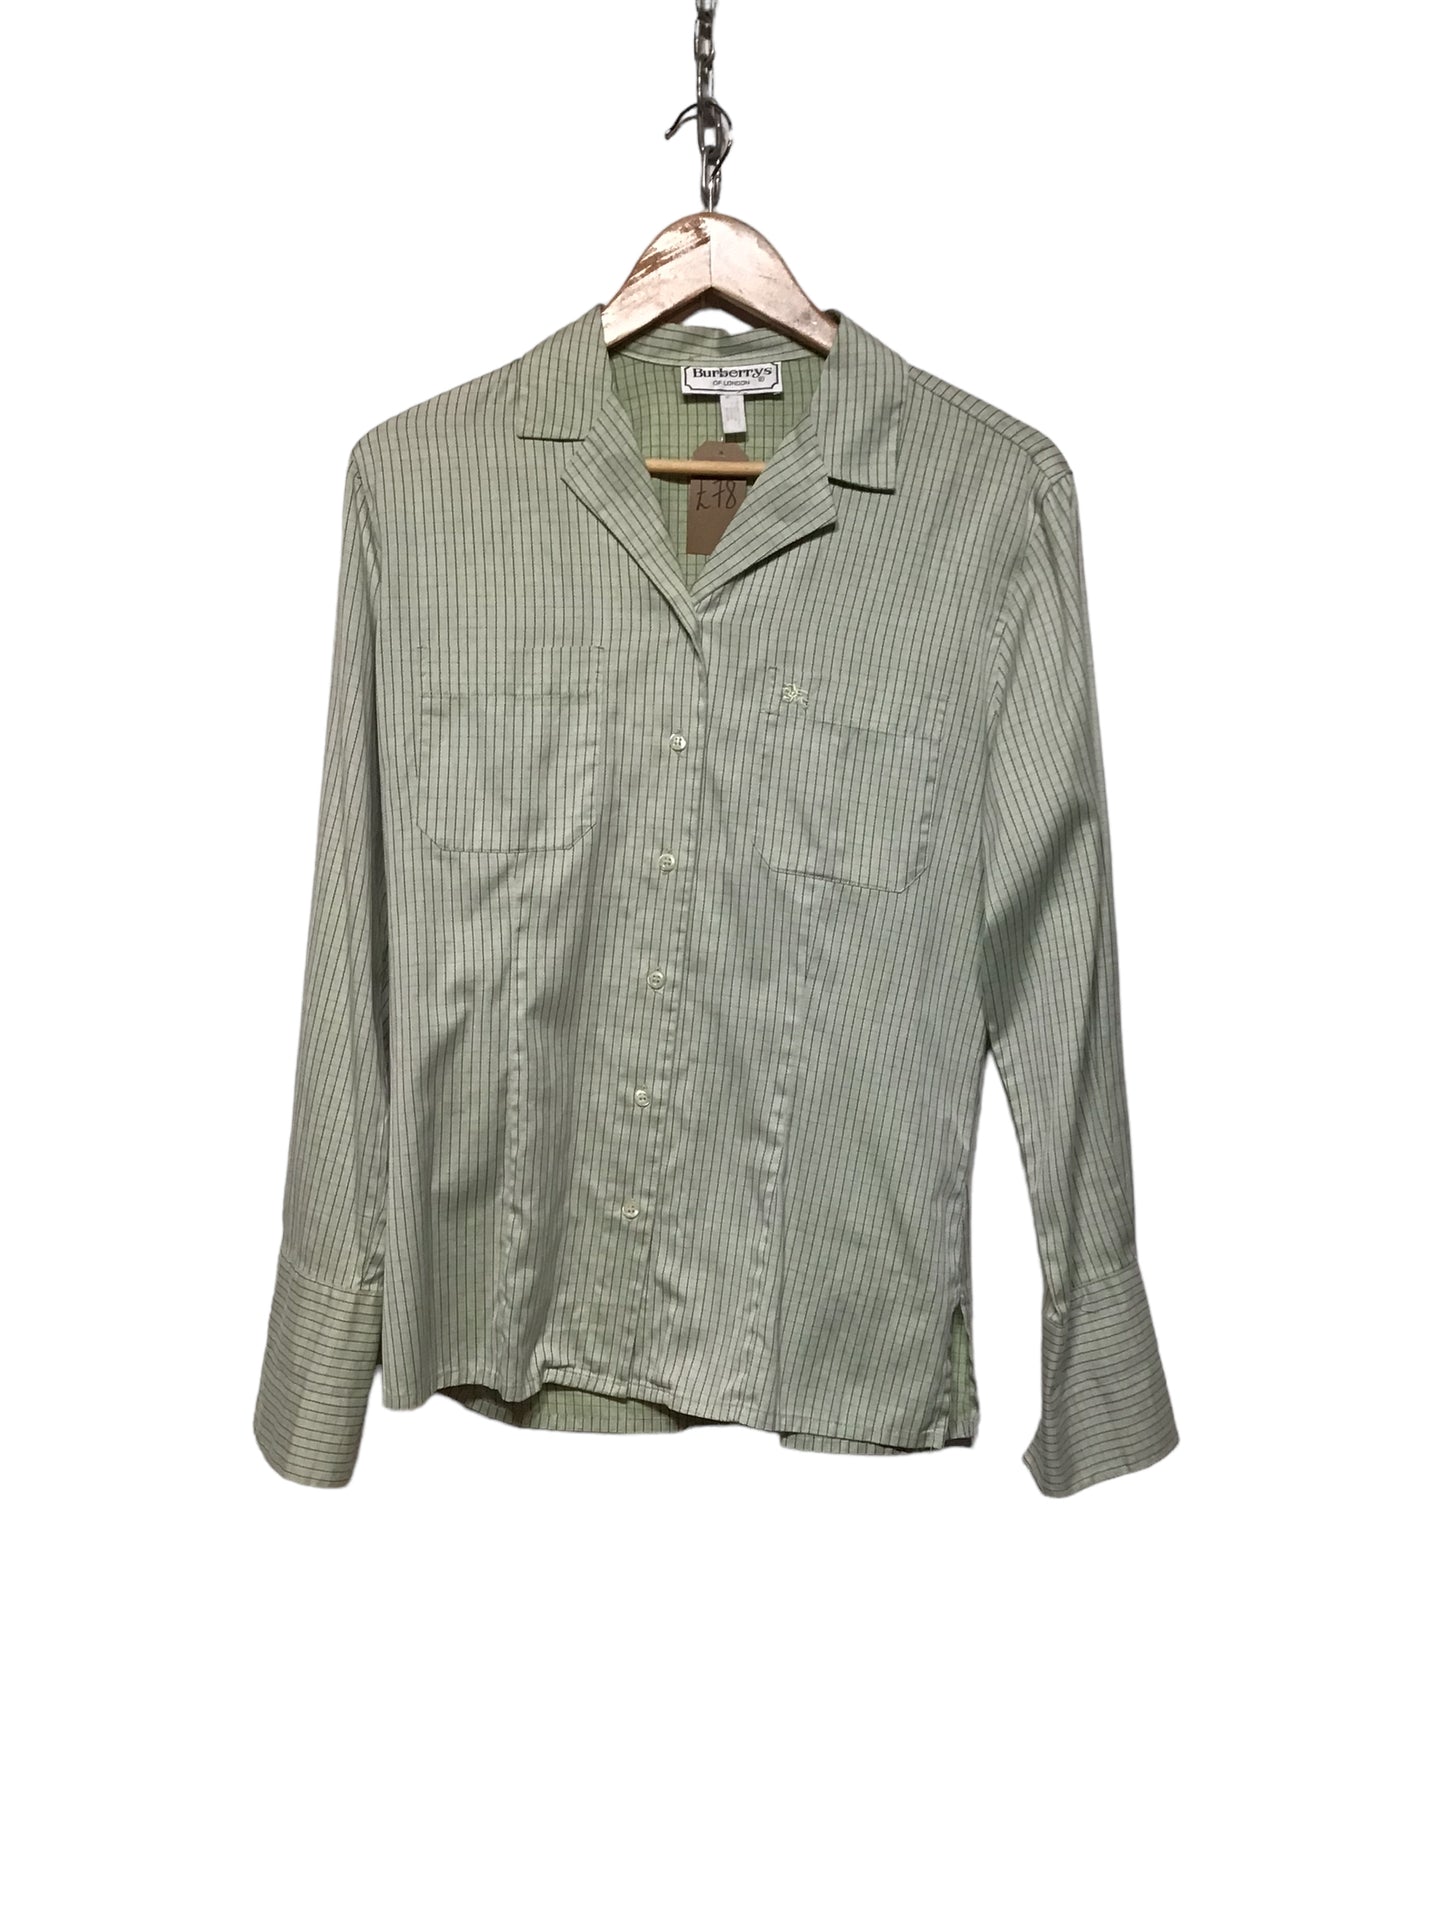 Burberry Green Check Shirt (Size M)